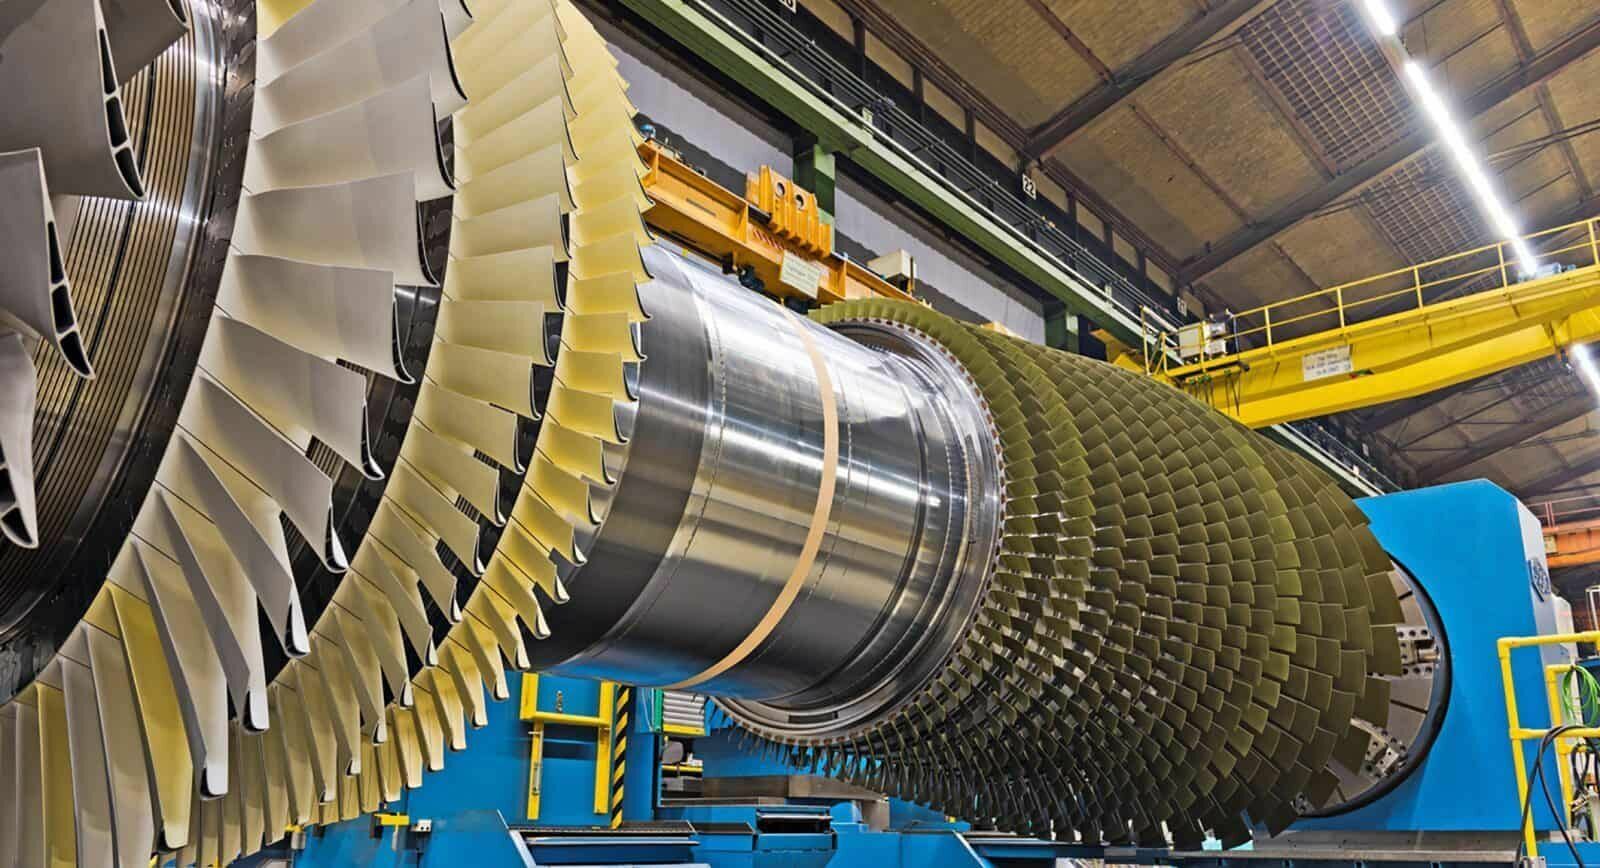 Media: Canada will return the turbine to Gazprom